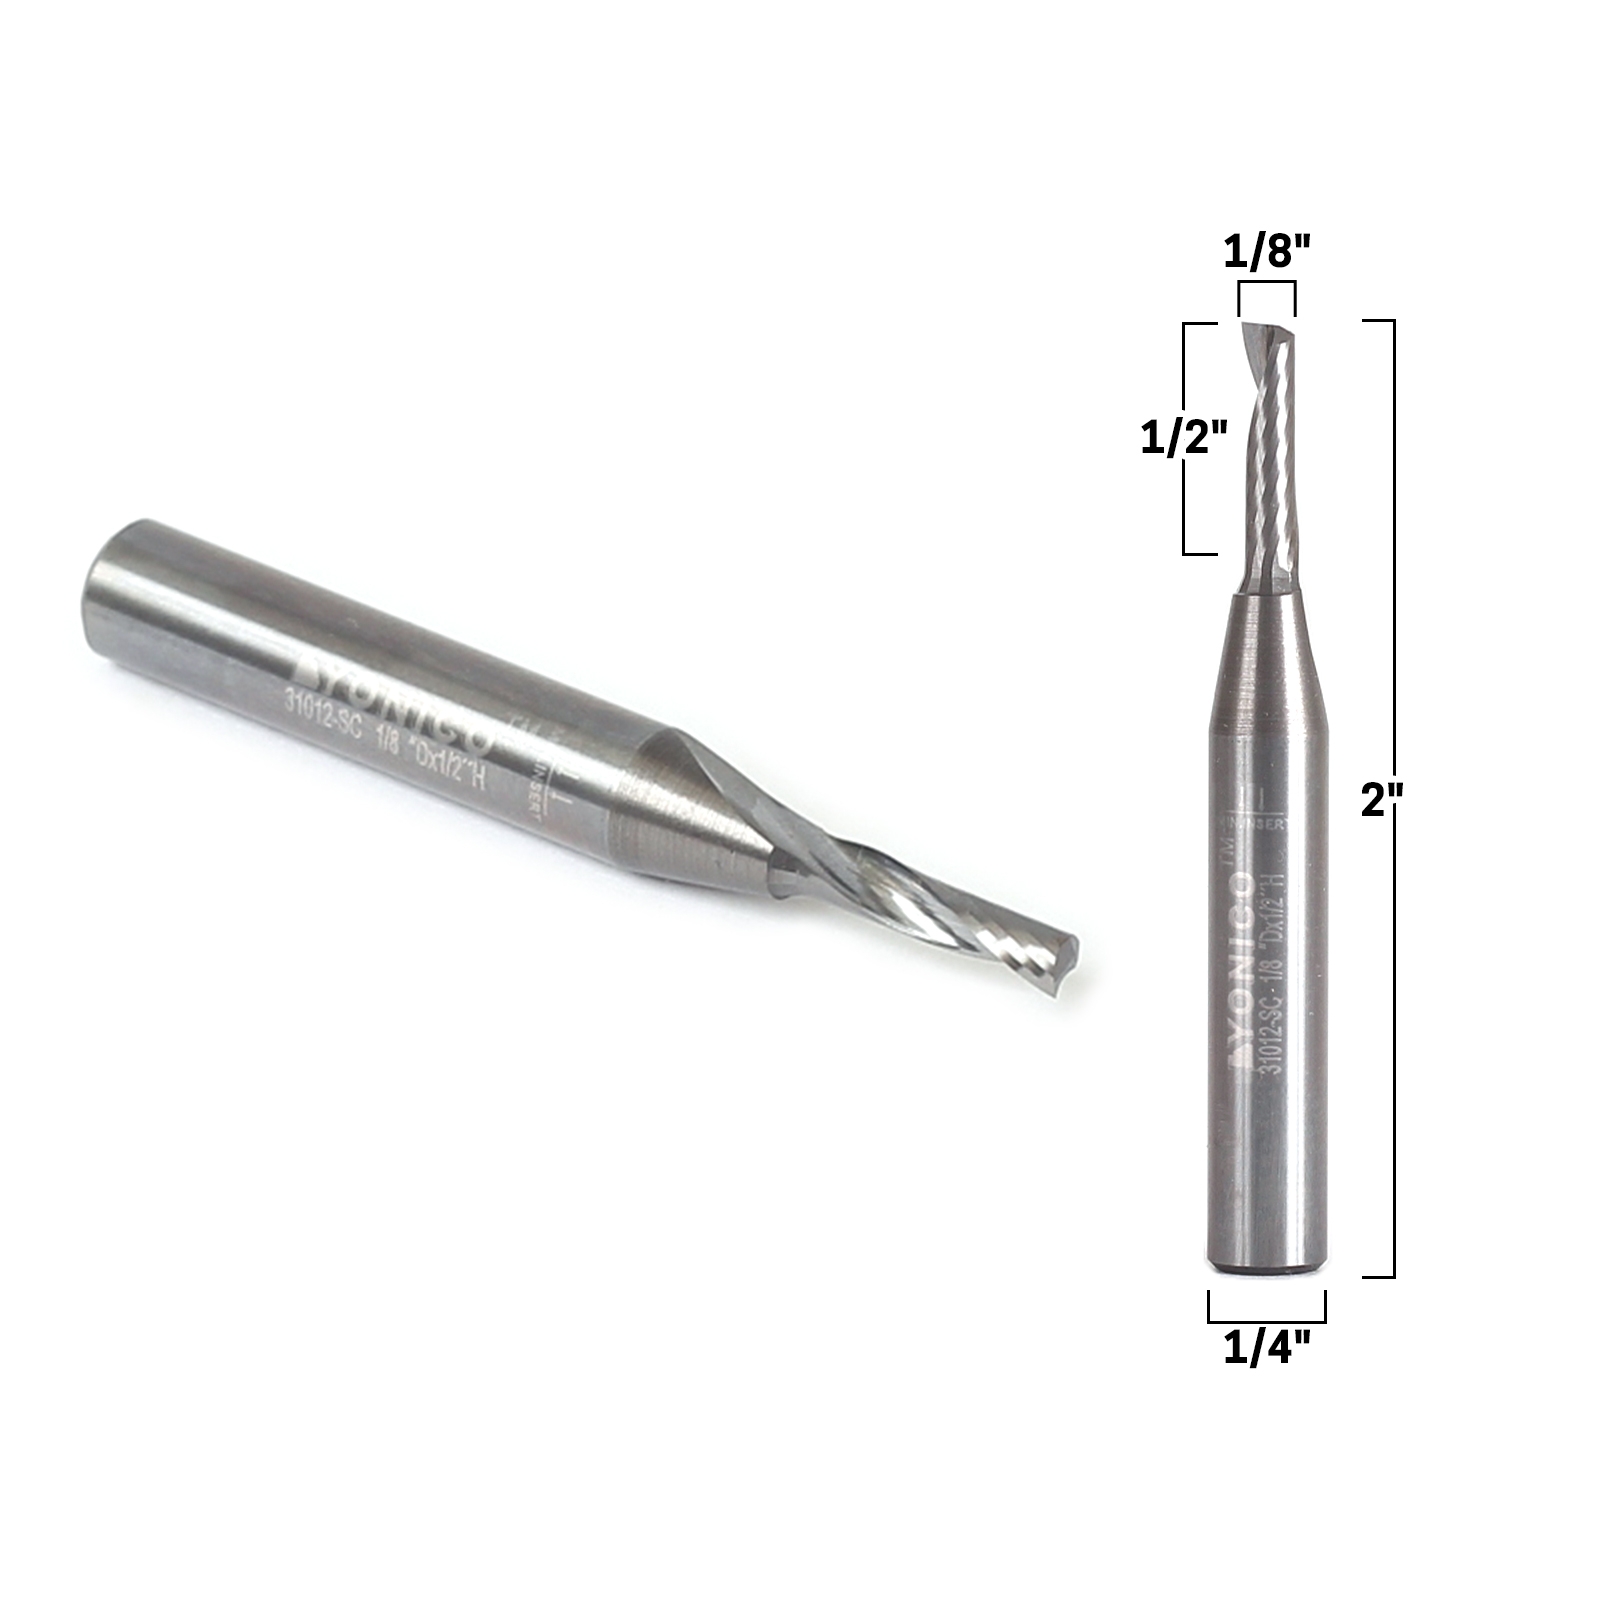 1/8" Diameter 1/2"LOC 1 Flute Carbide Router for Aluminum Melin USA Part #12859 